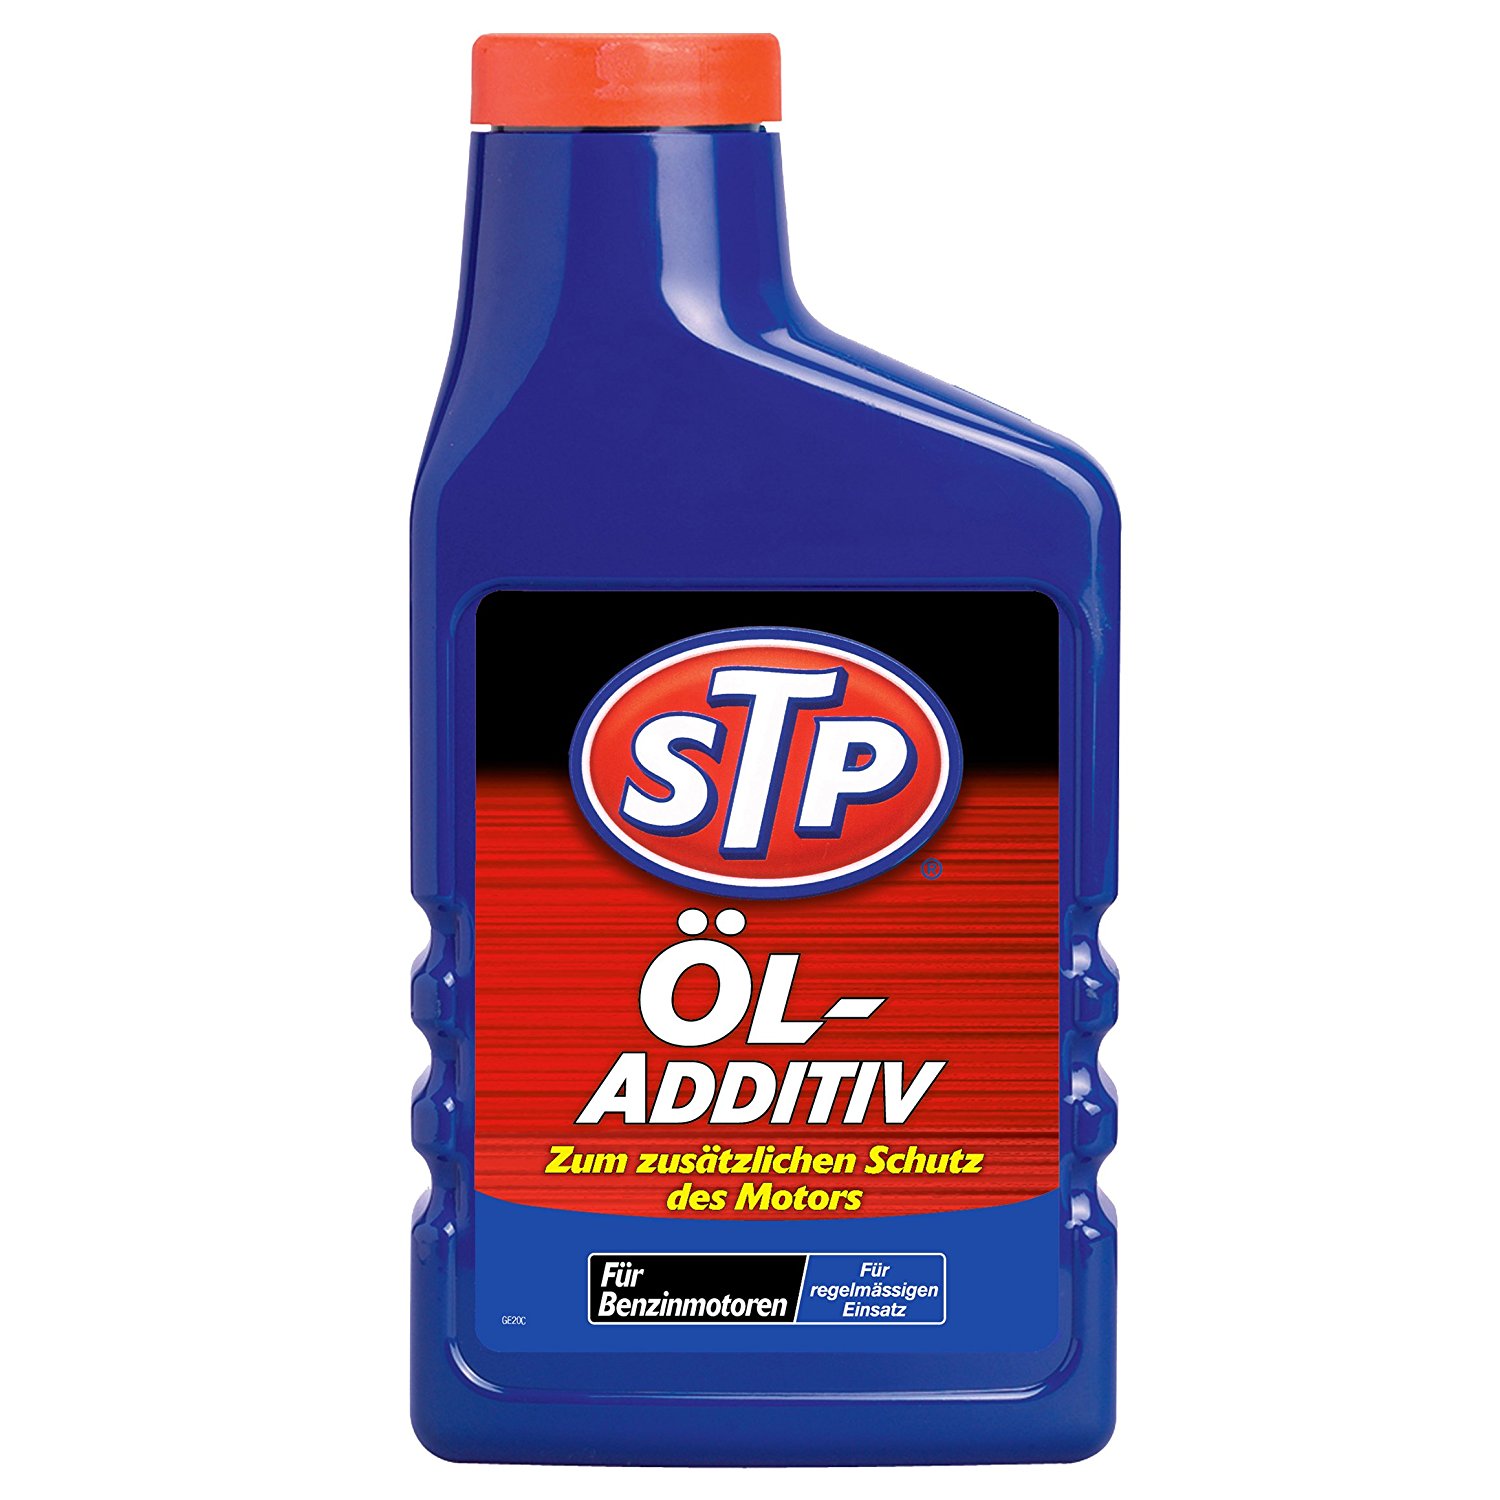 STP Öl Additiv für Benzinmotoren 450 ml